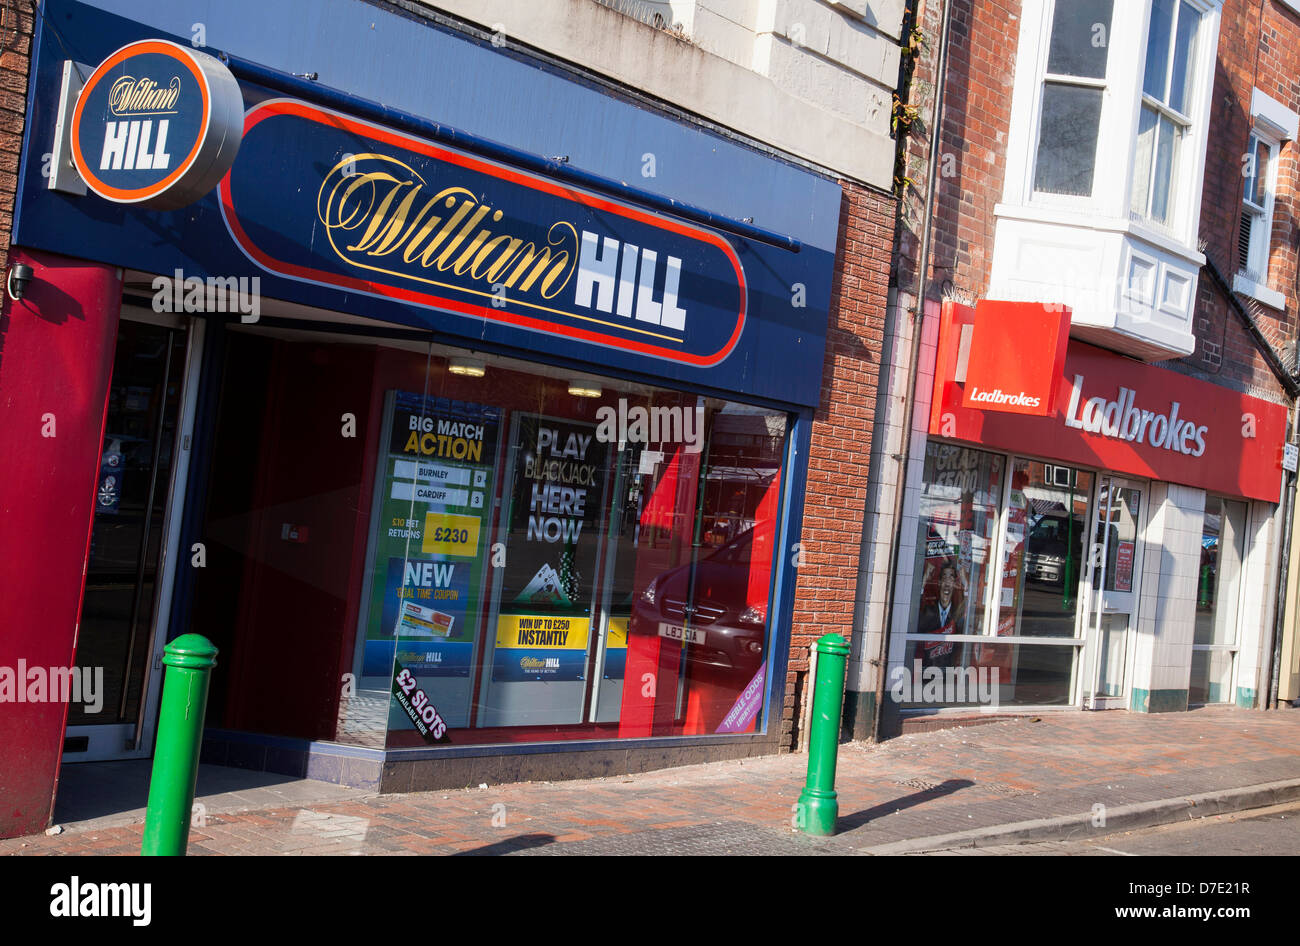 William Hill & Ladbrokes betting shops in Heanor, Derbyshire, England ...